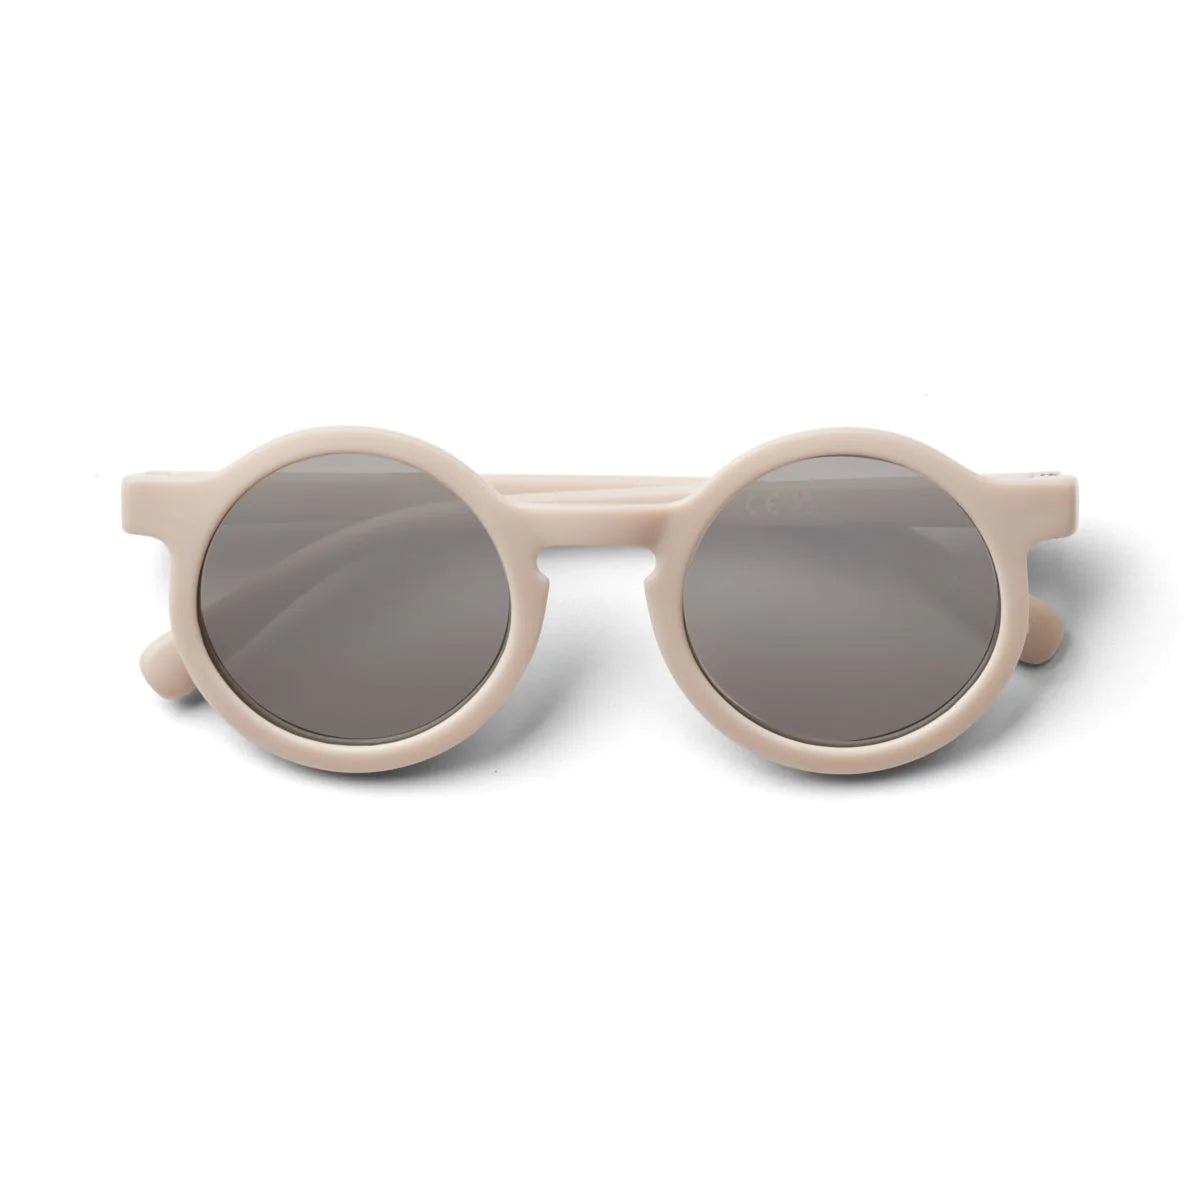 Darla Mirror Sunglasses - Sandy